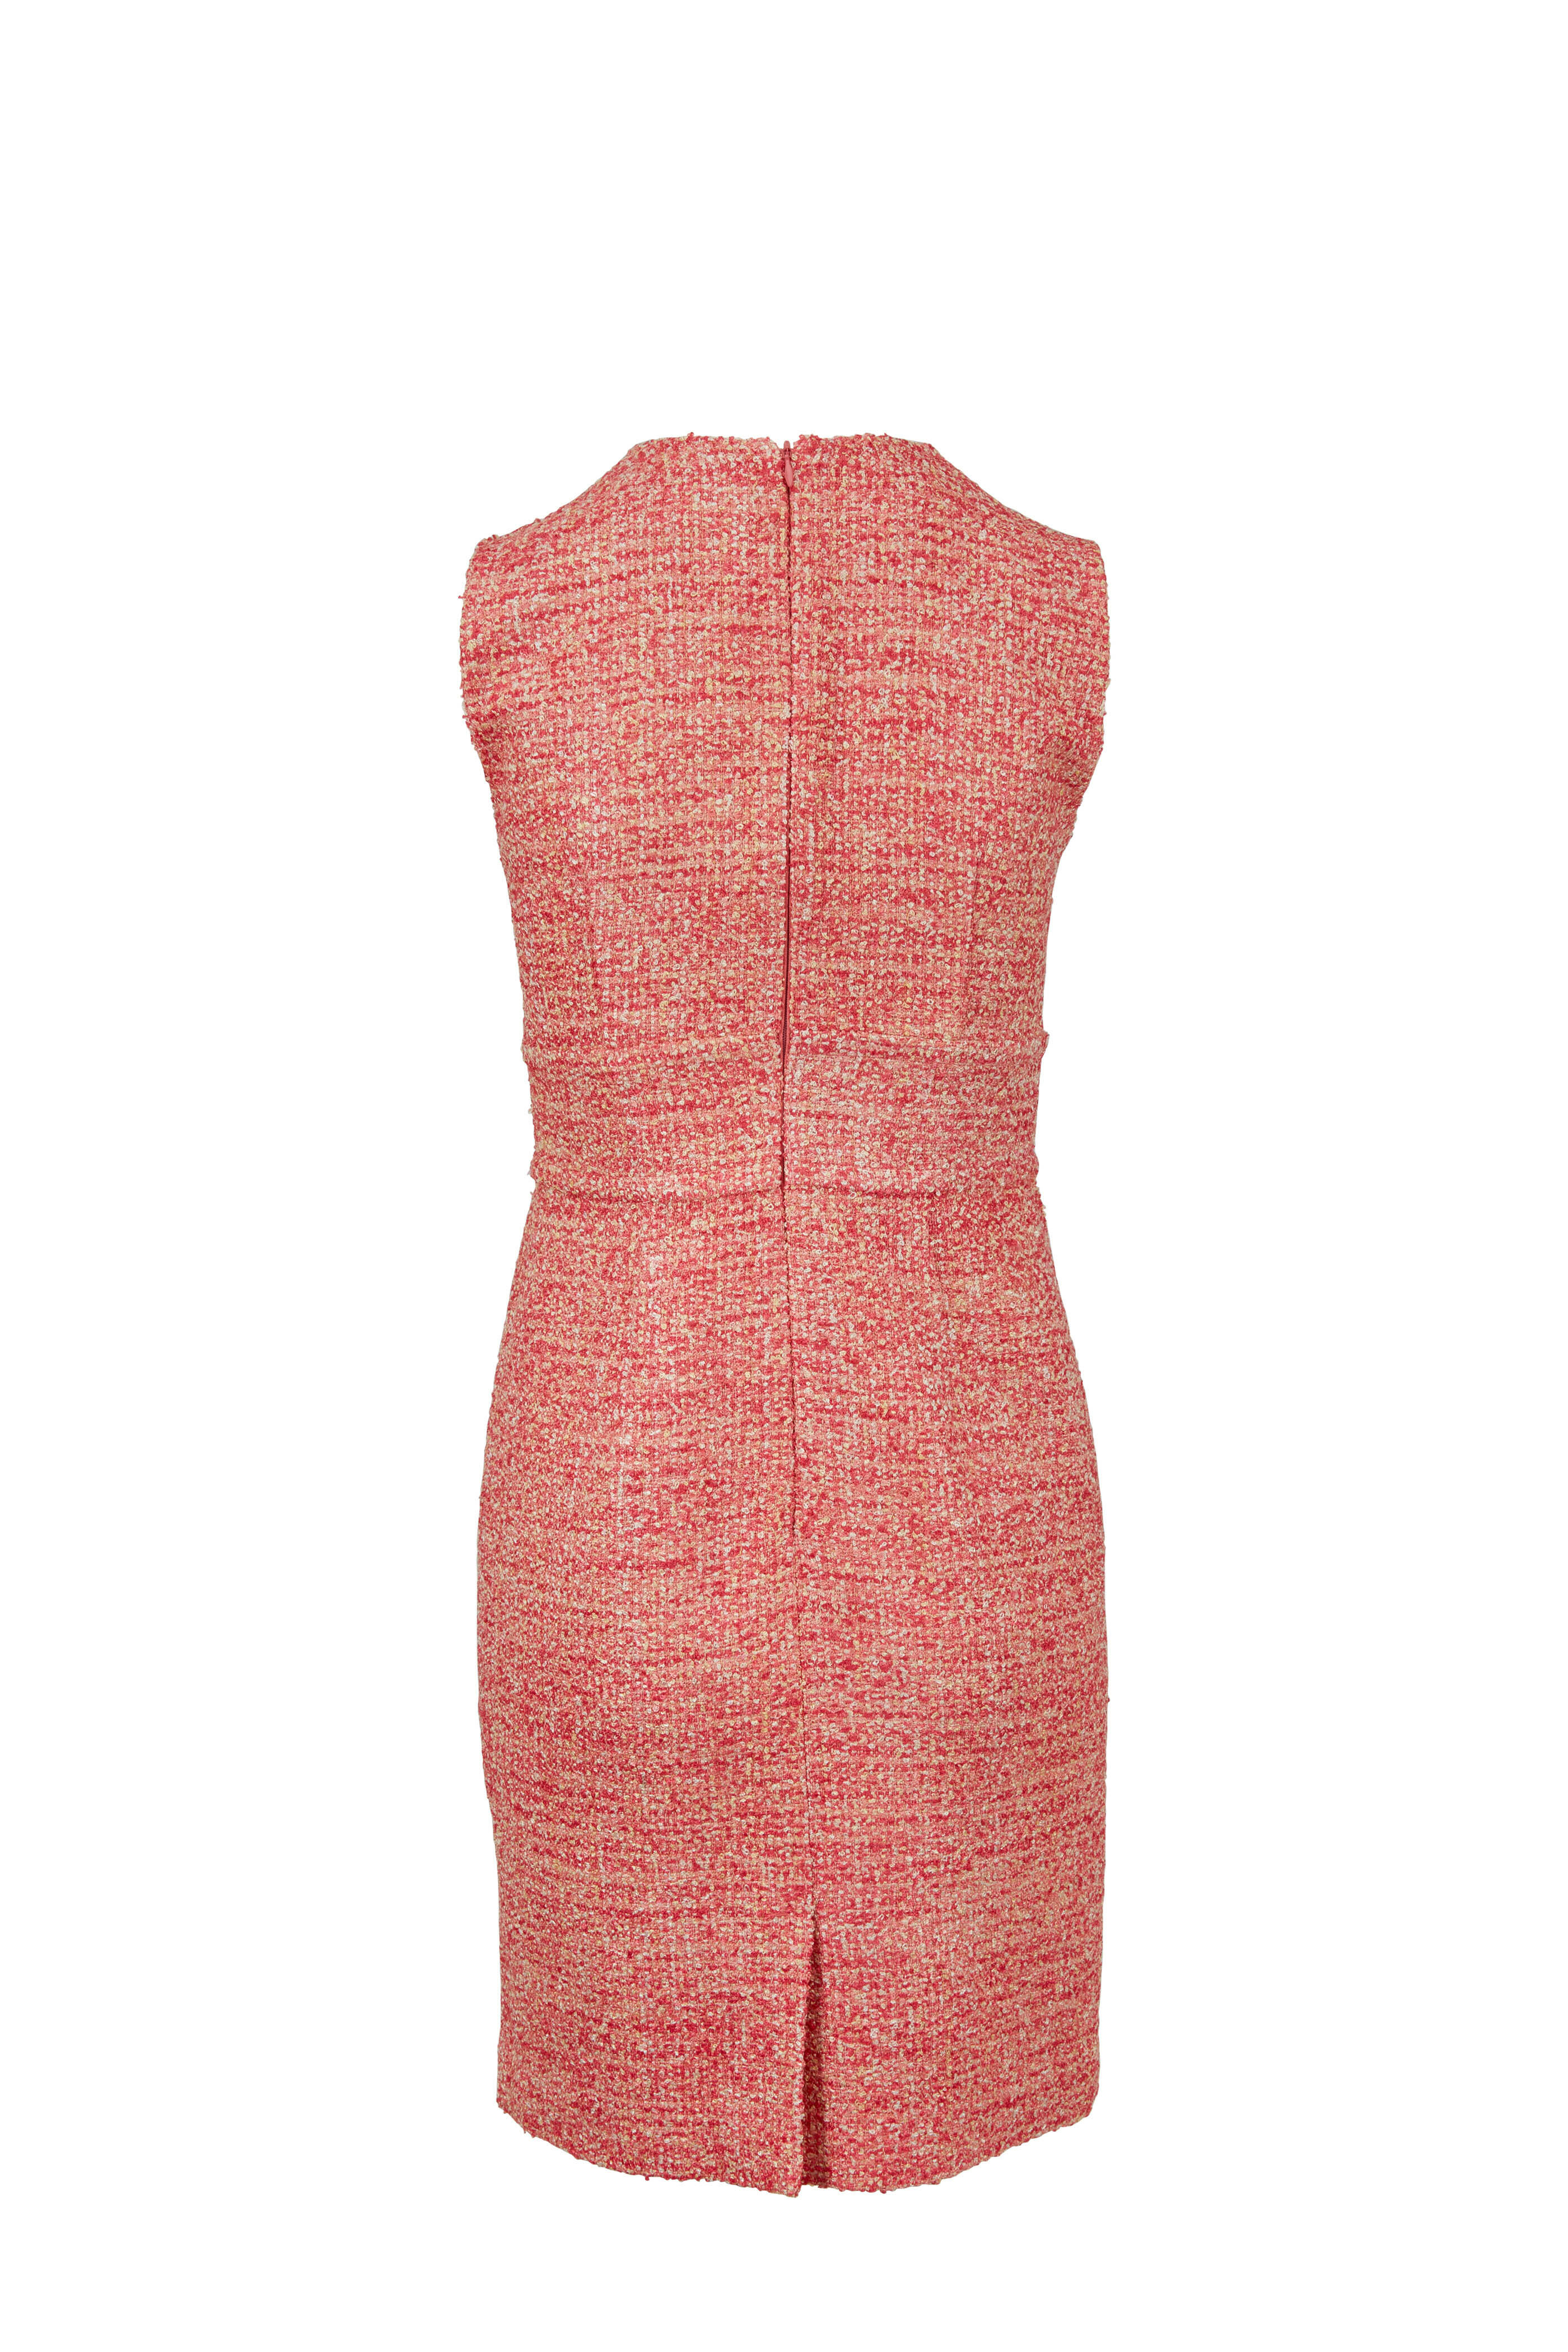 Paule Ka - Pink Tweed Button Front Dress